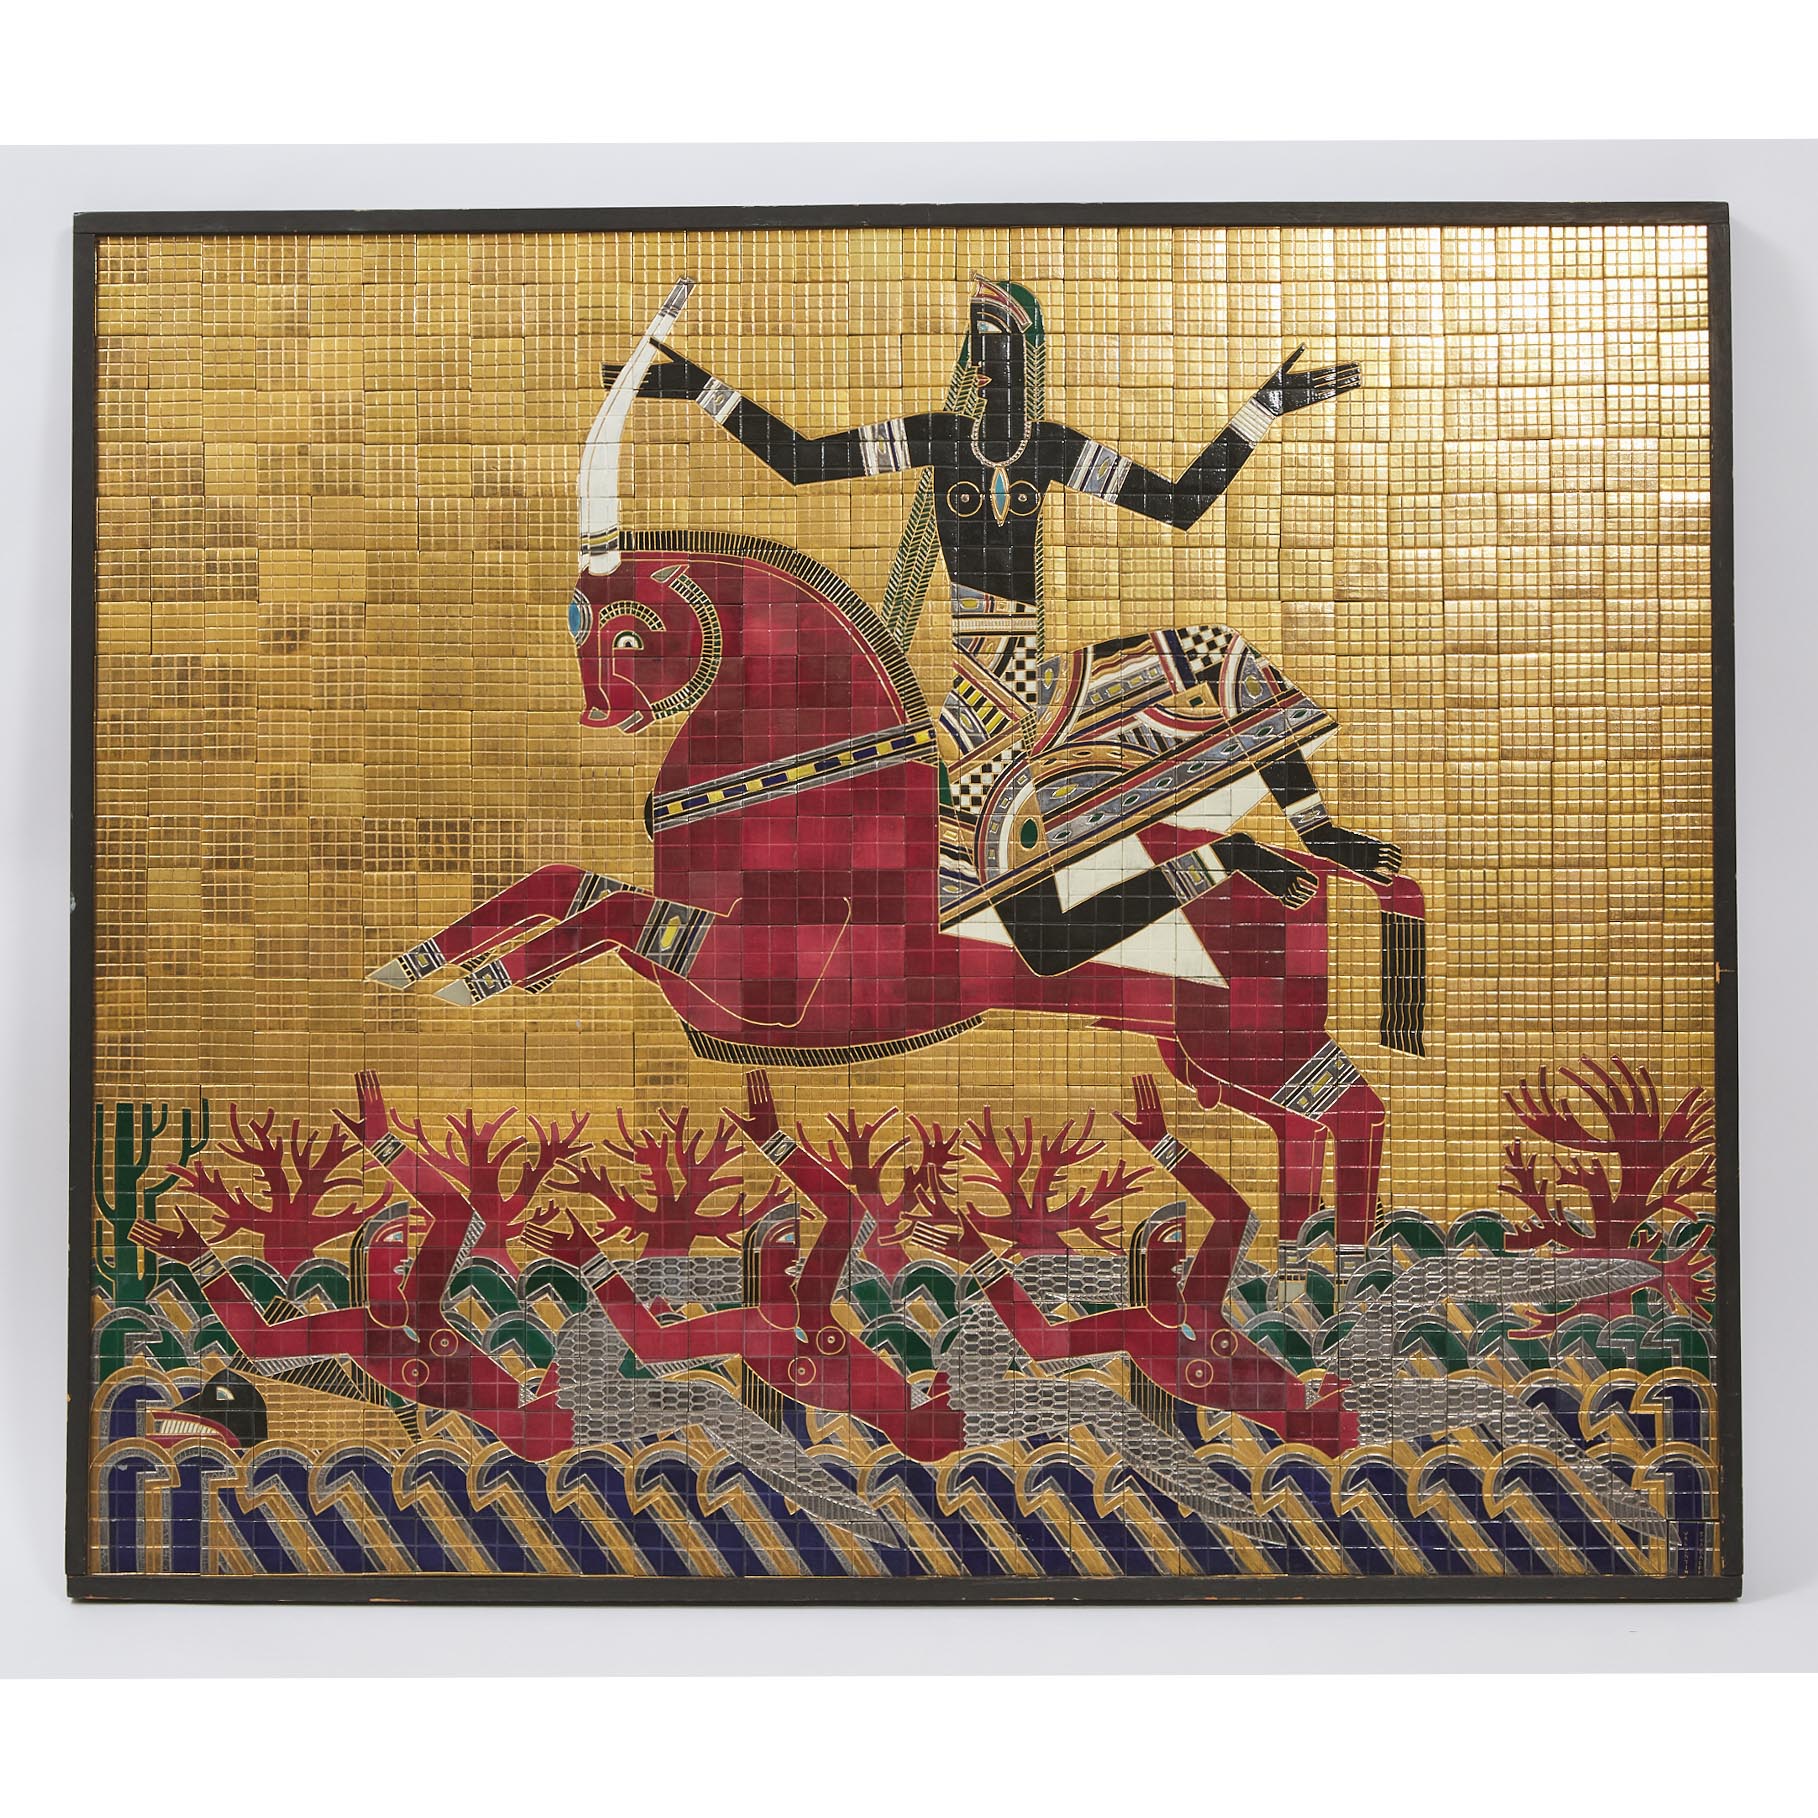 Art Deco Mythological  Ceramic Mosaic Panel by Valentin Firsov Shabaeff (Russian-Canadian, 1891-1978)